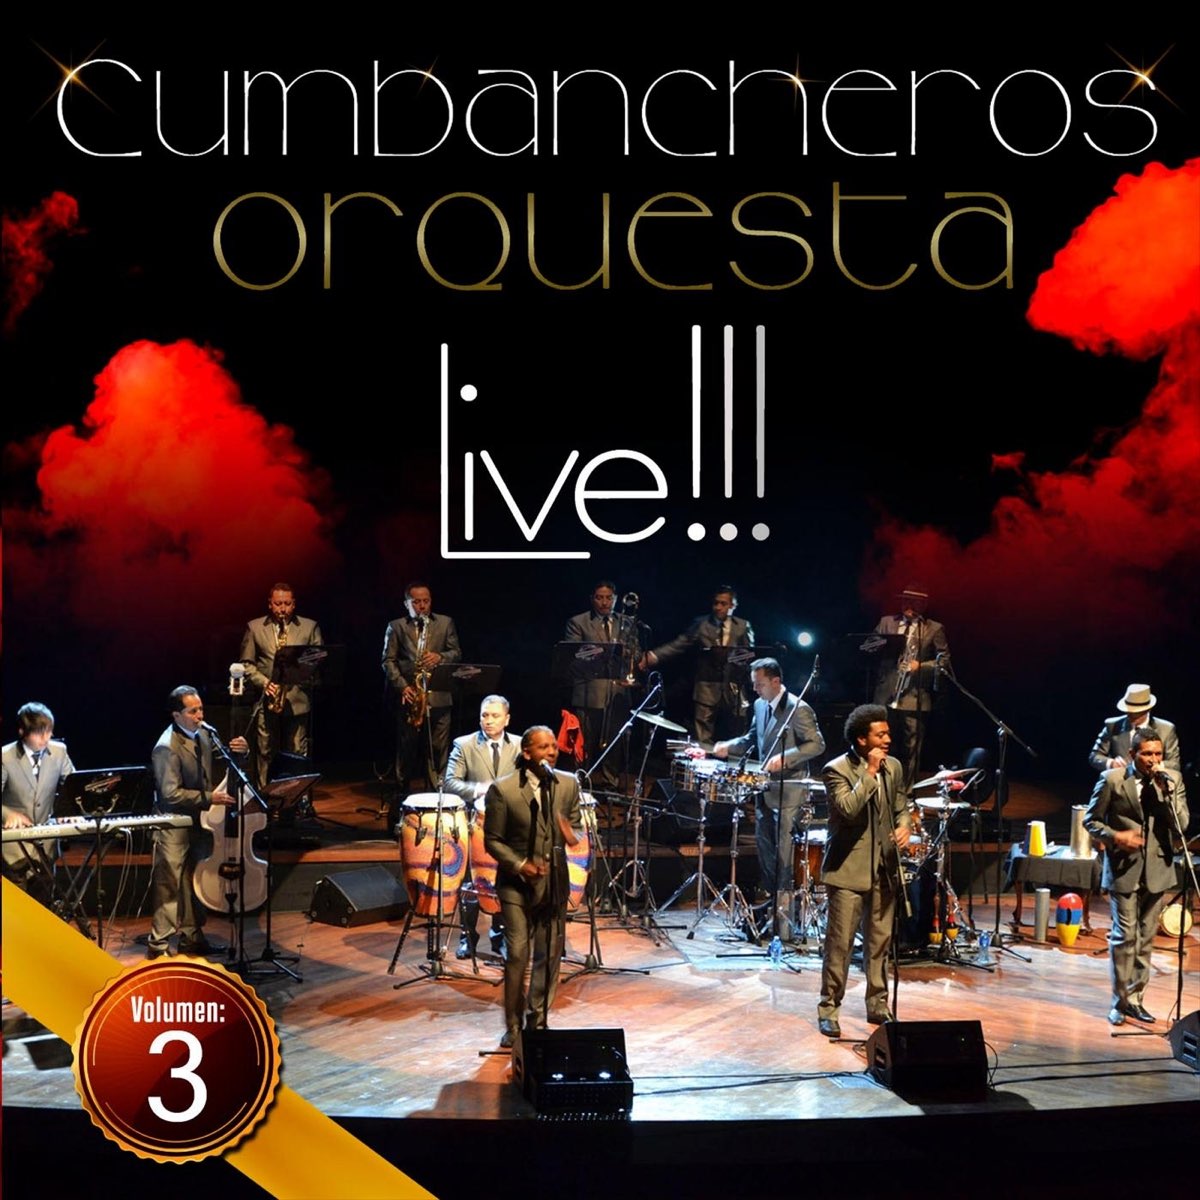 Cumbancheros Live!!! Vol. 3 by Cumbancheros Orquesta on Apple Music